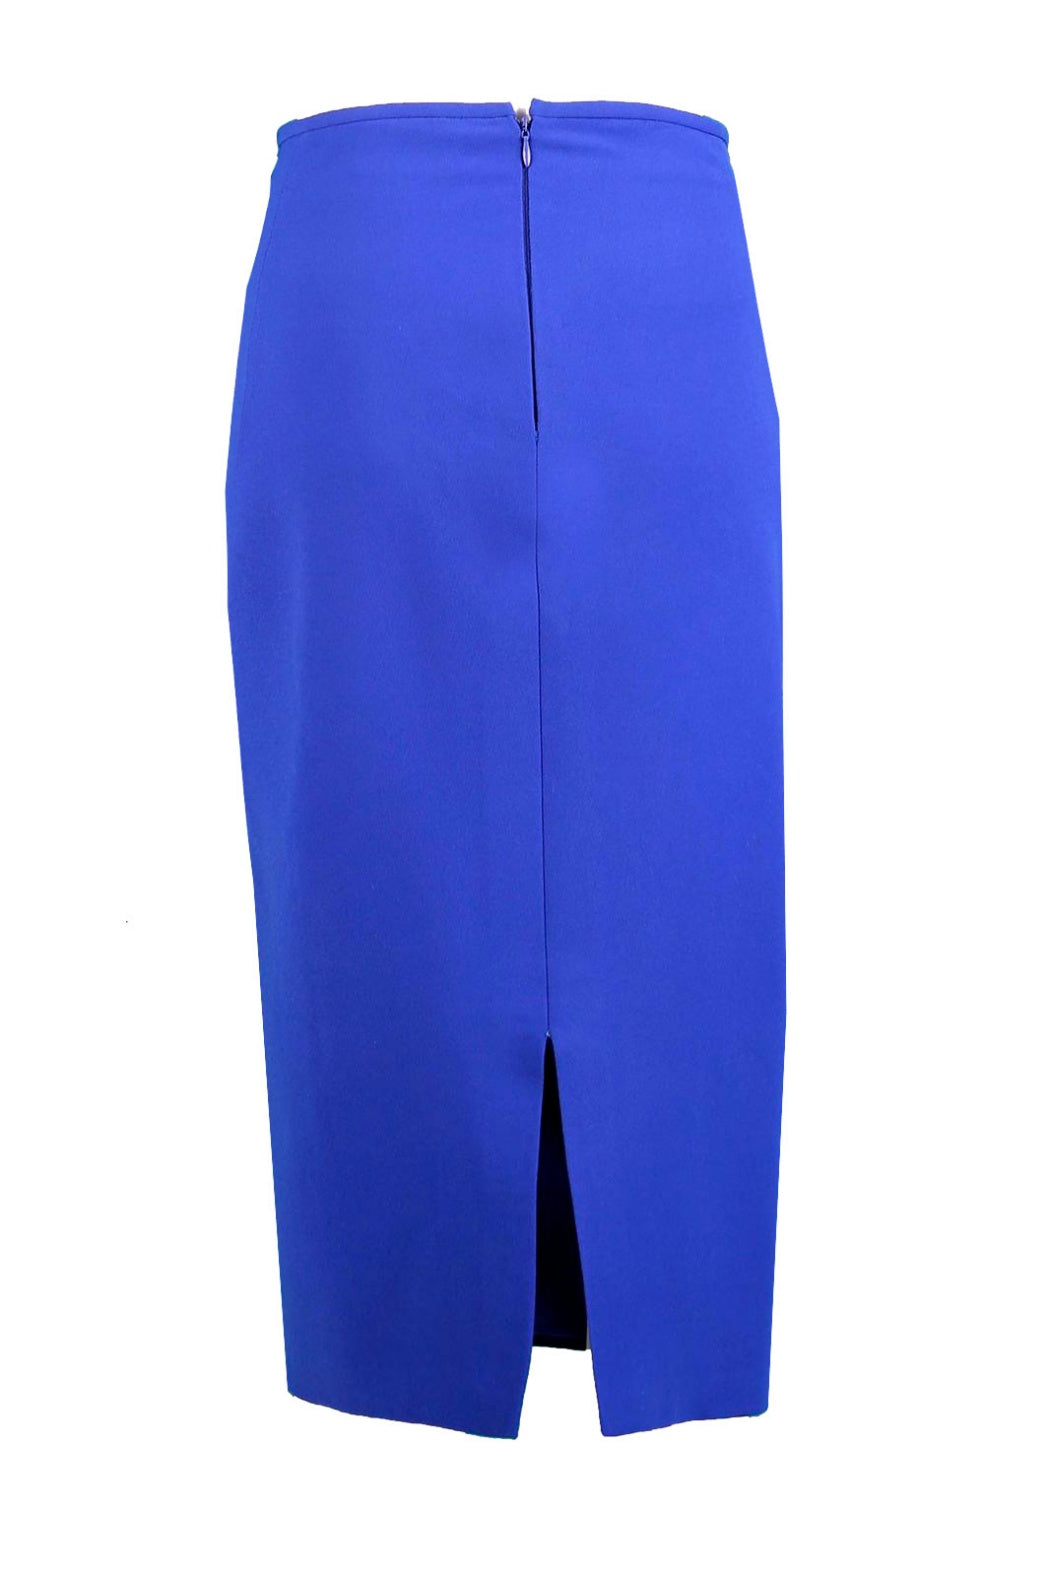 Abella Cobalt Blue Crepe Pencil Skirt